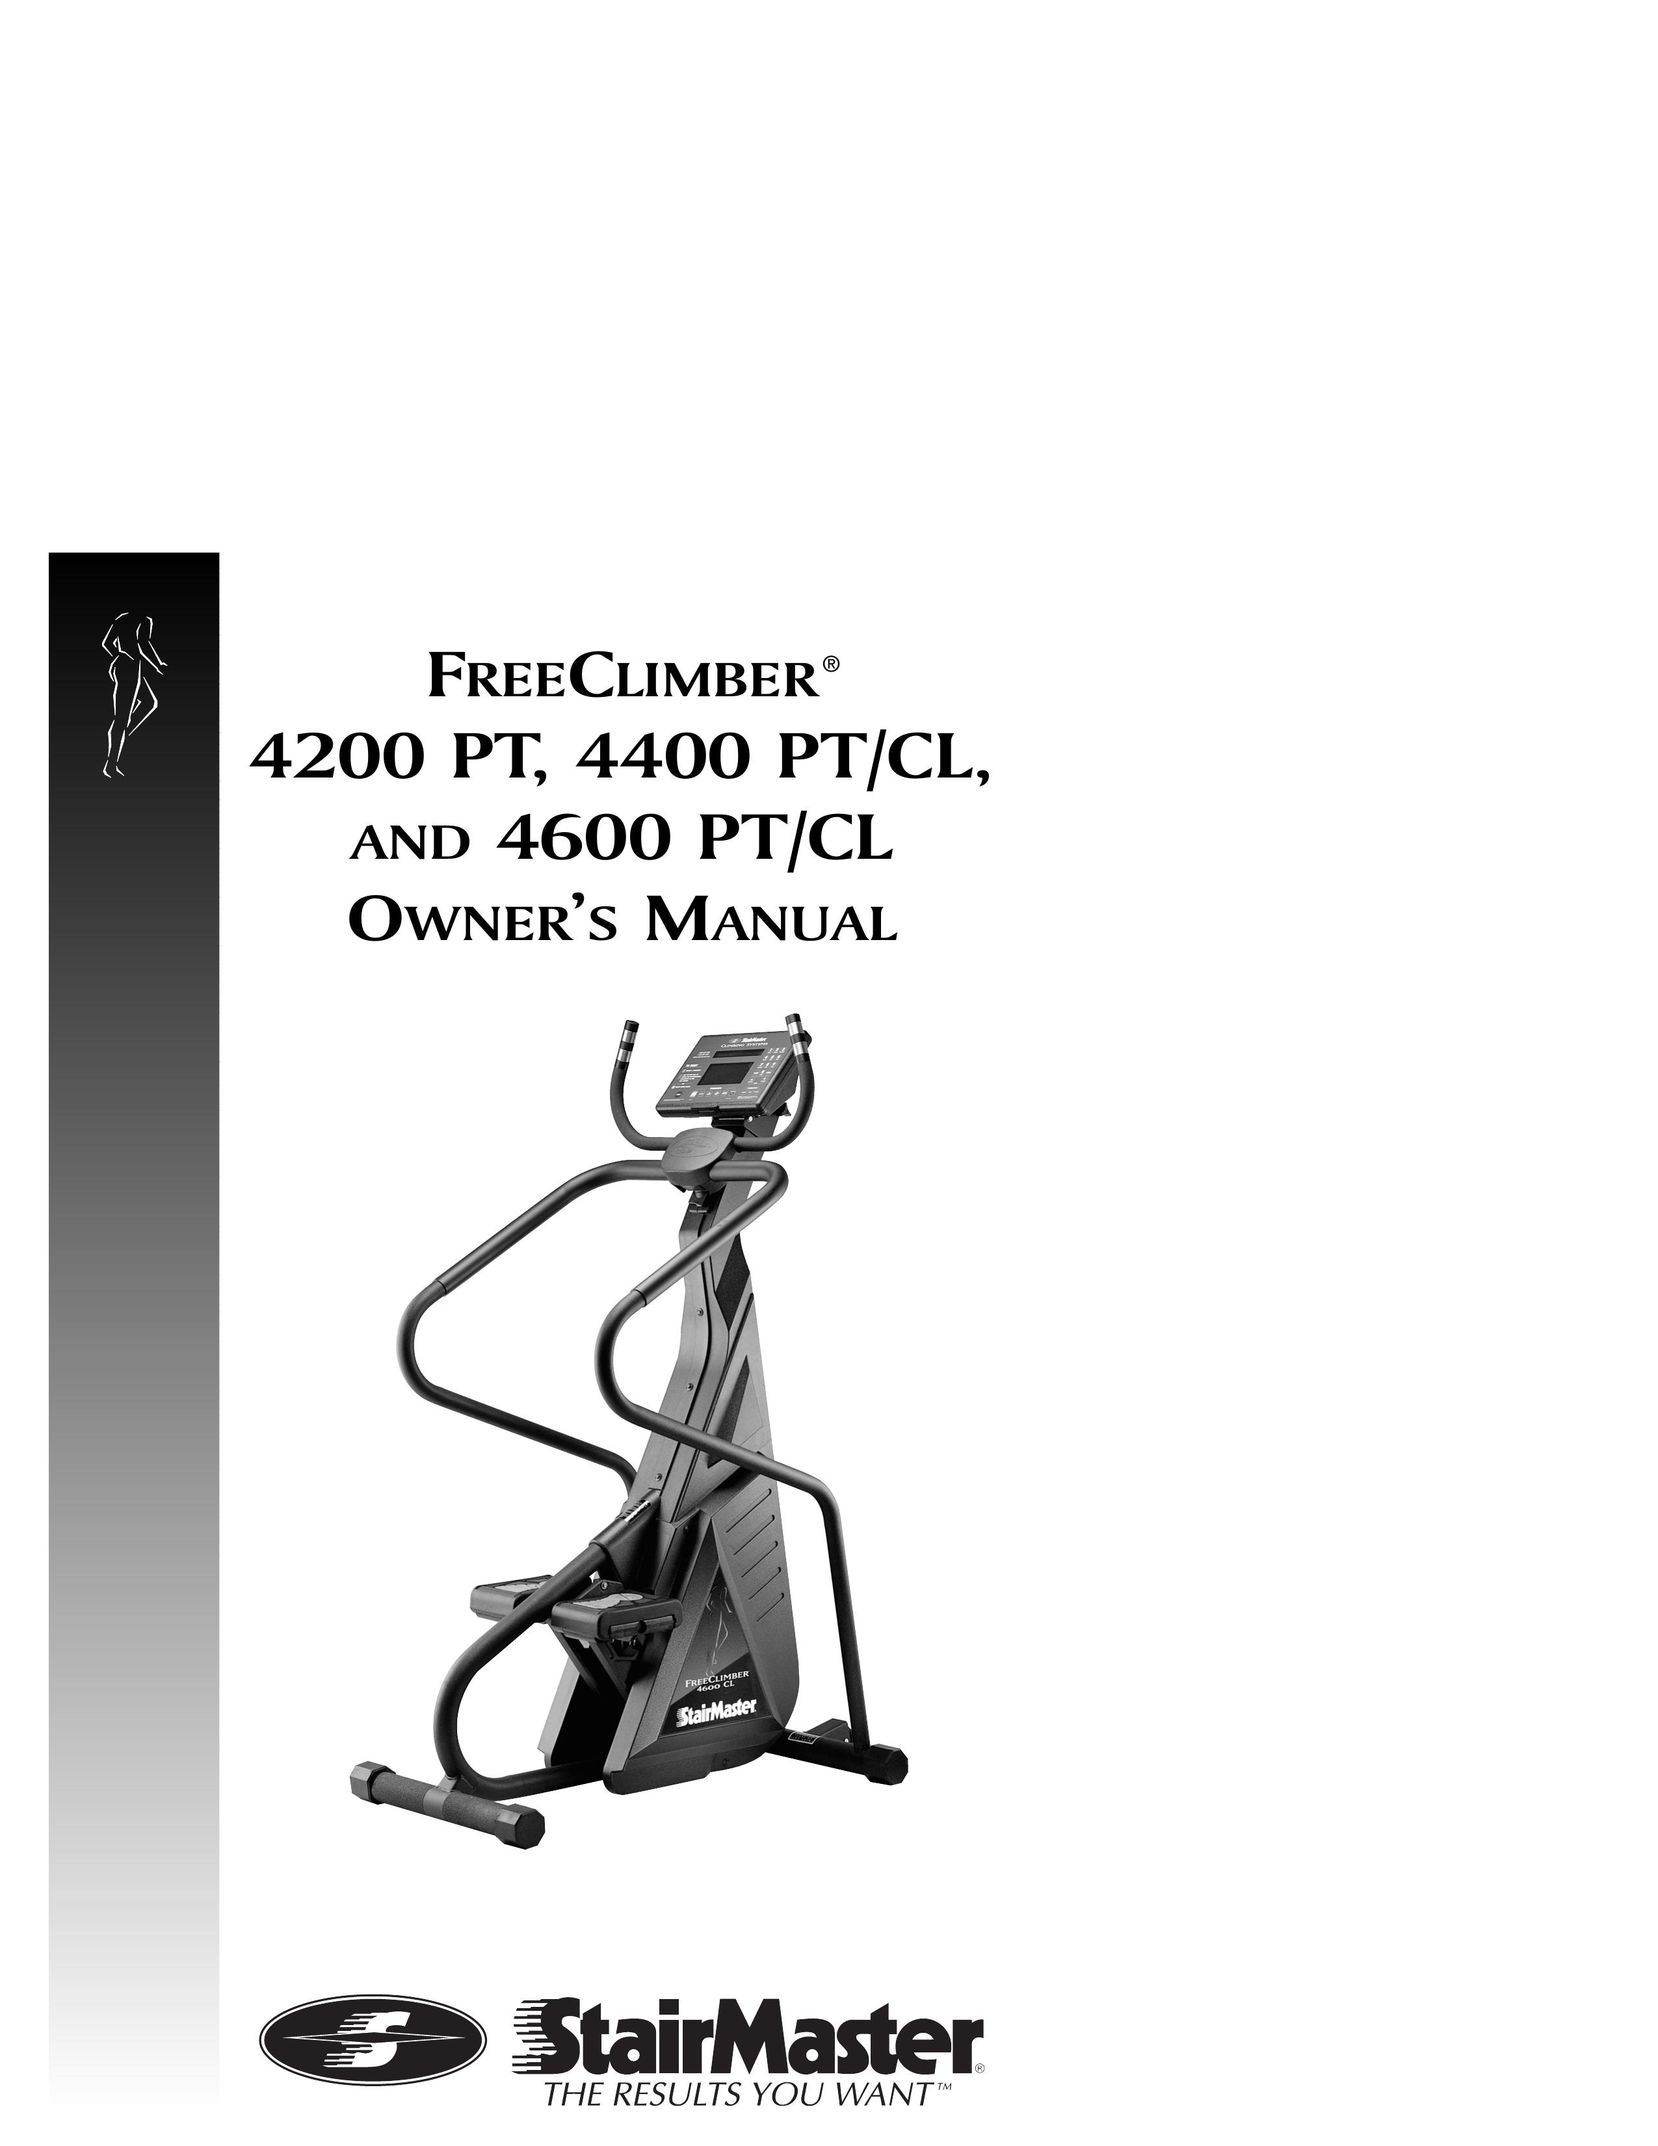 Stairmaster 4400 PT/CL Fitness Equipment User Manual